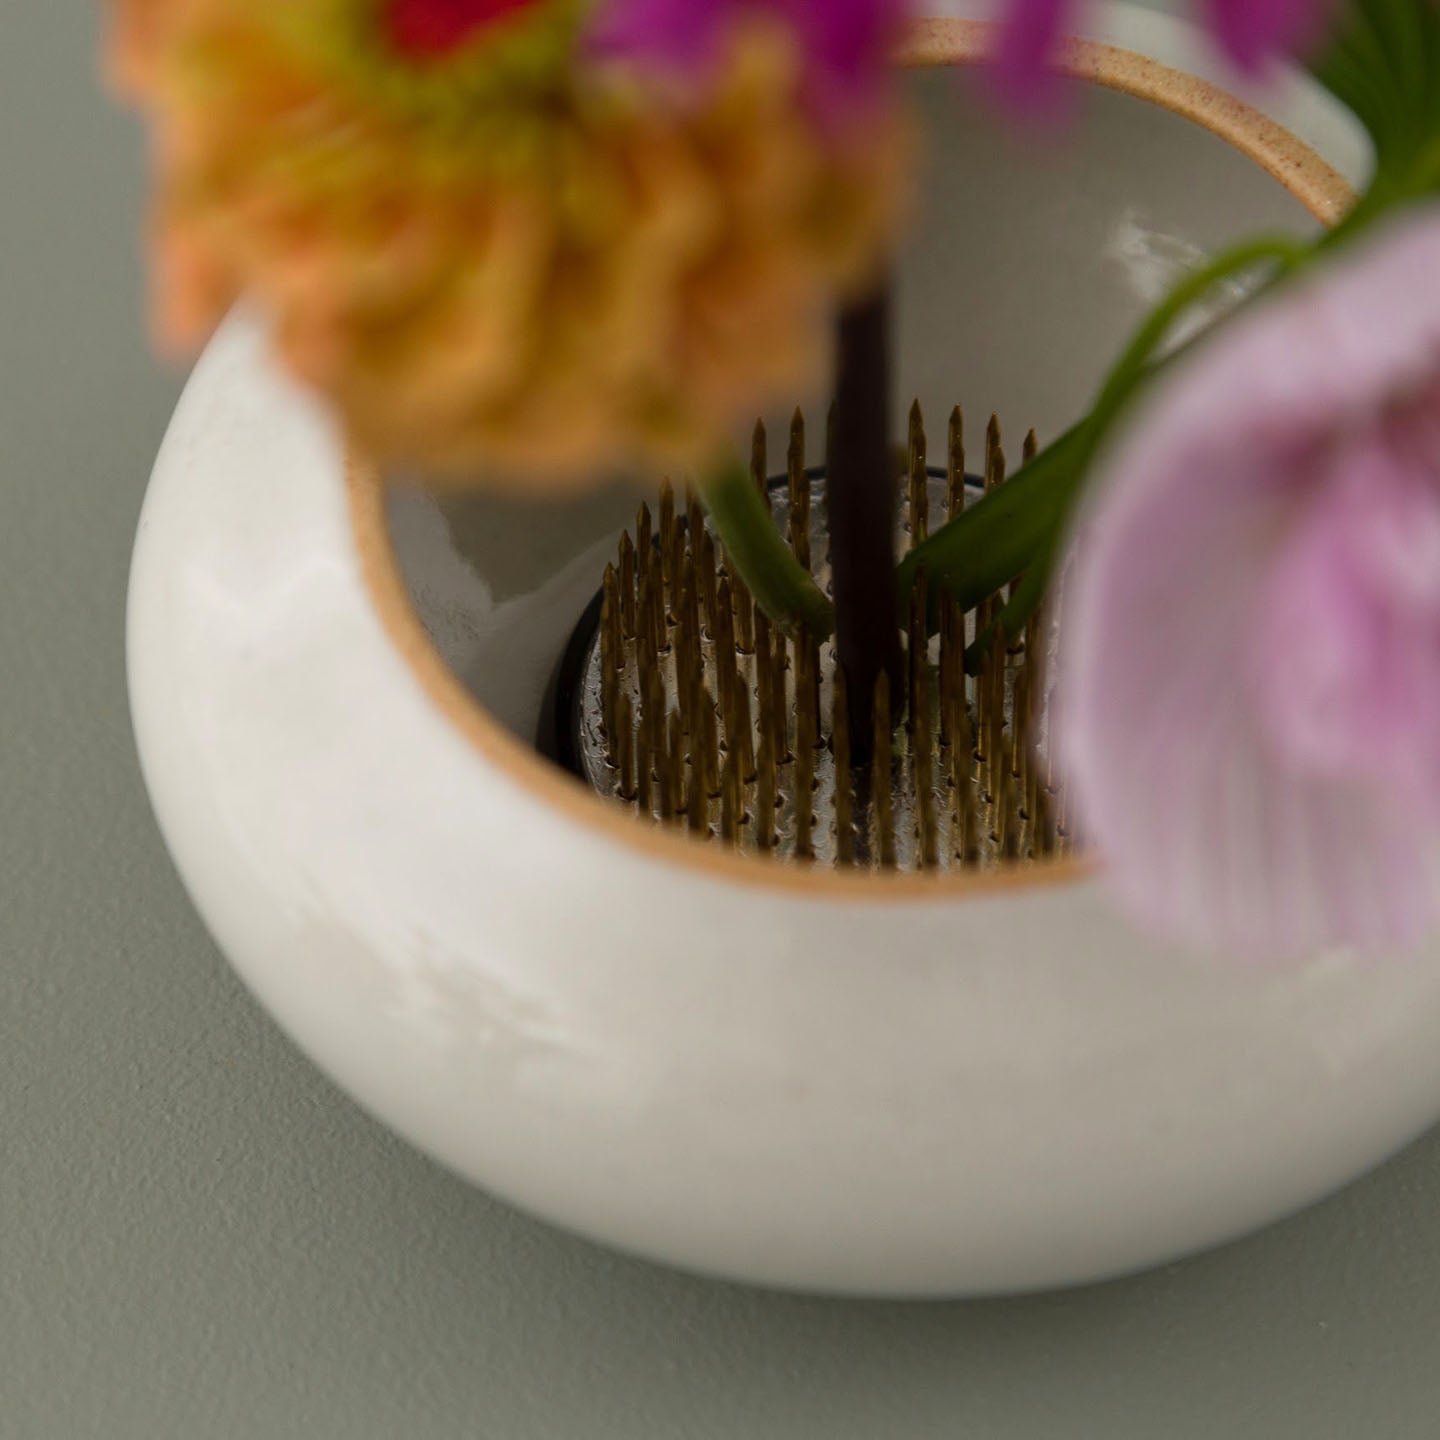 Ceramic Ikebana Vase